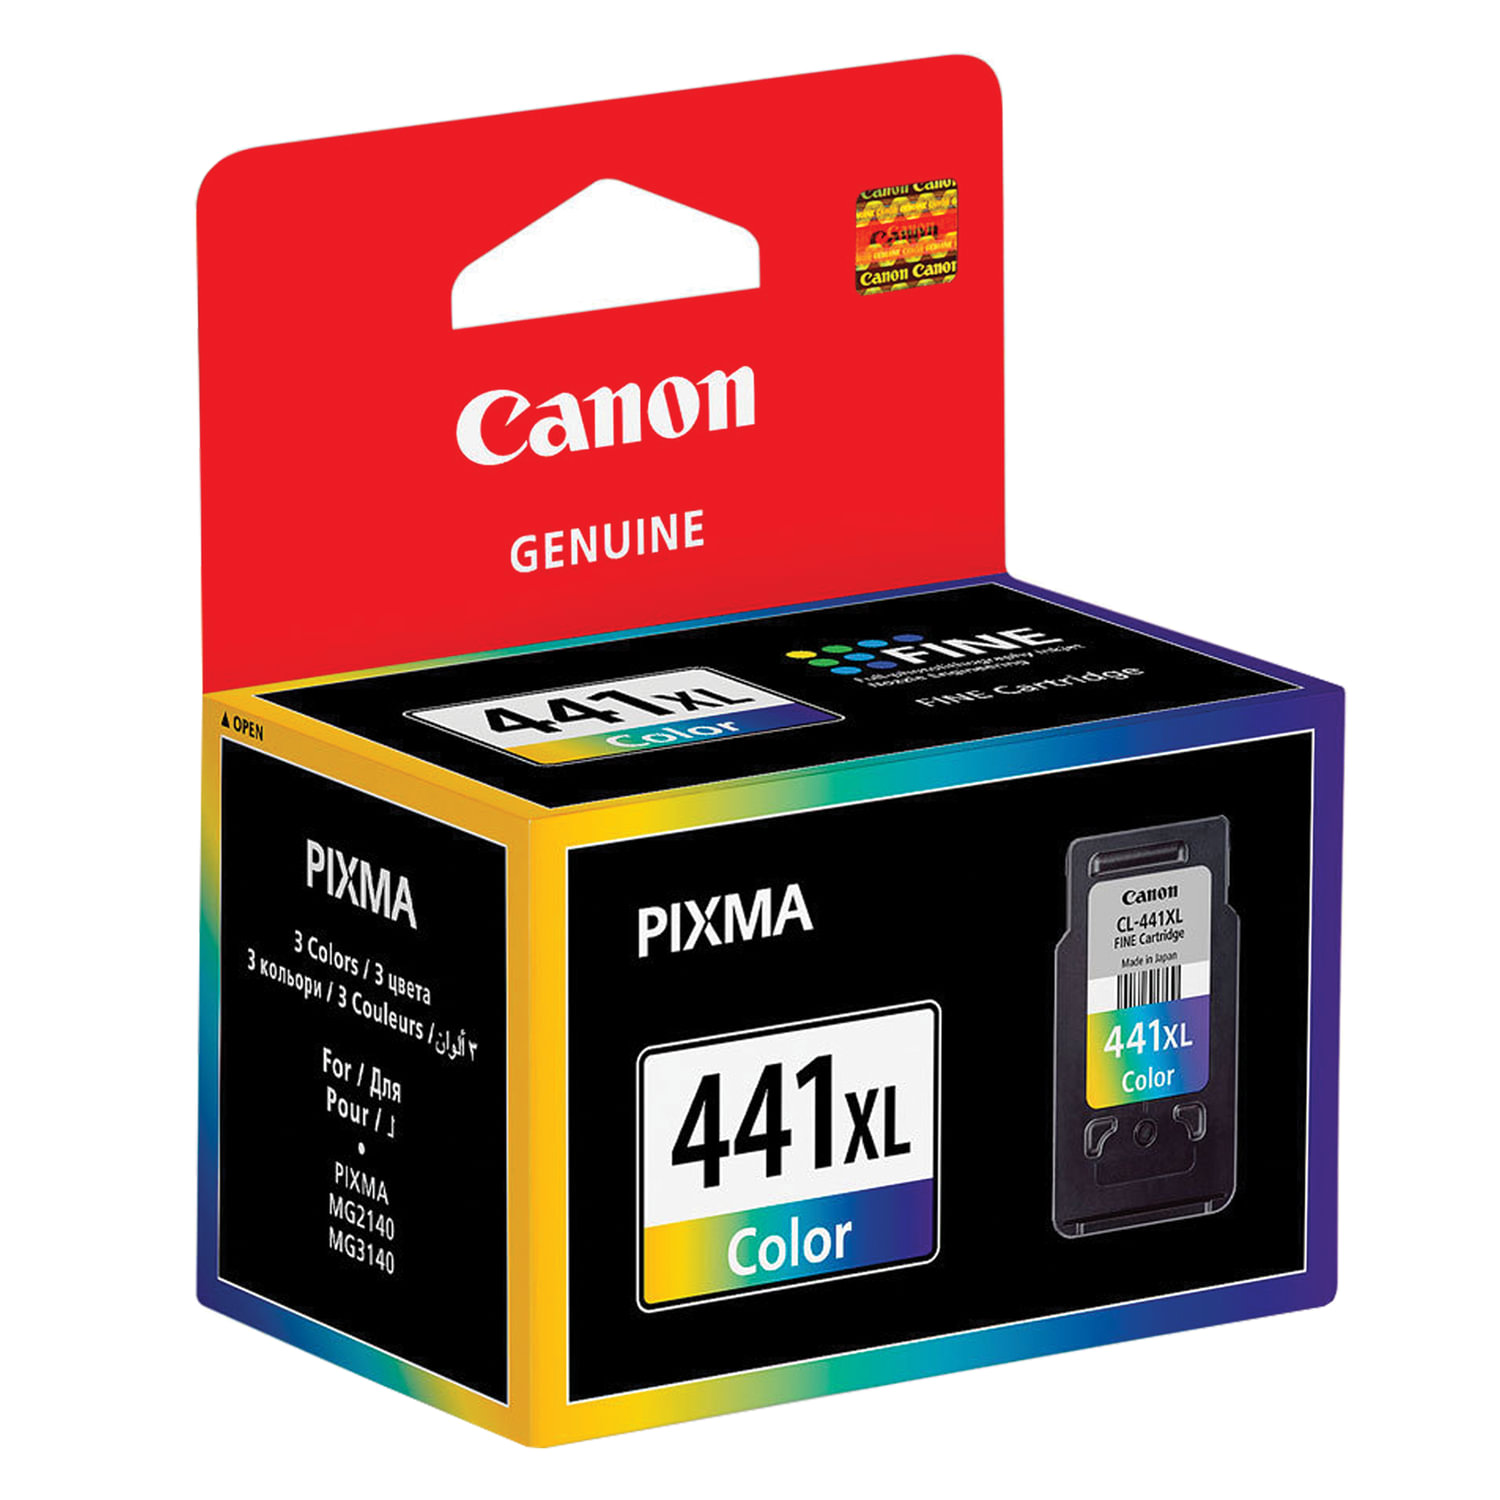 Купить картридж для принтера 650. Canon CL-441xl. Картридж Canon CL-441 Color. Canon PIXMA 441xl. Canon CL-441 принтер.